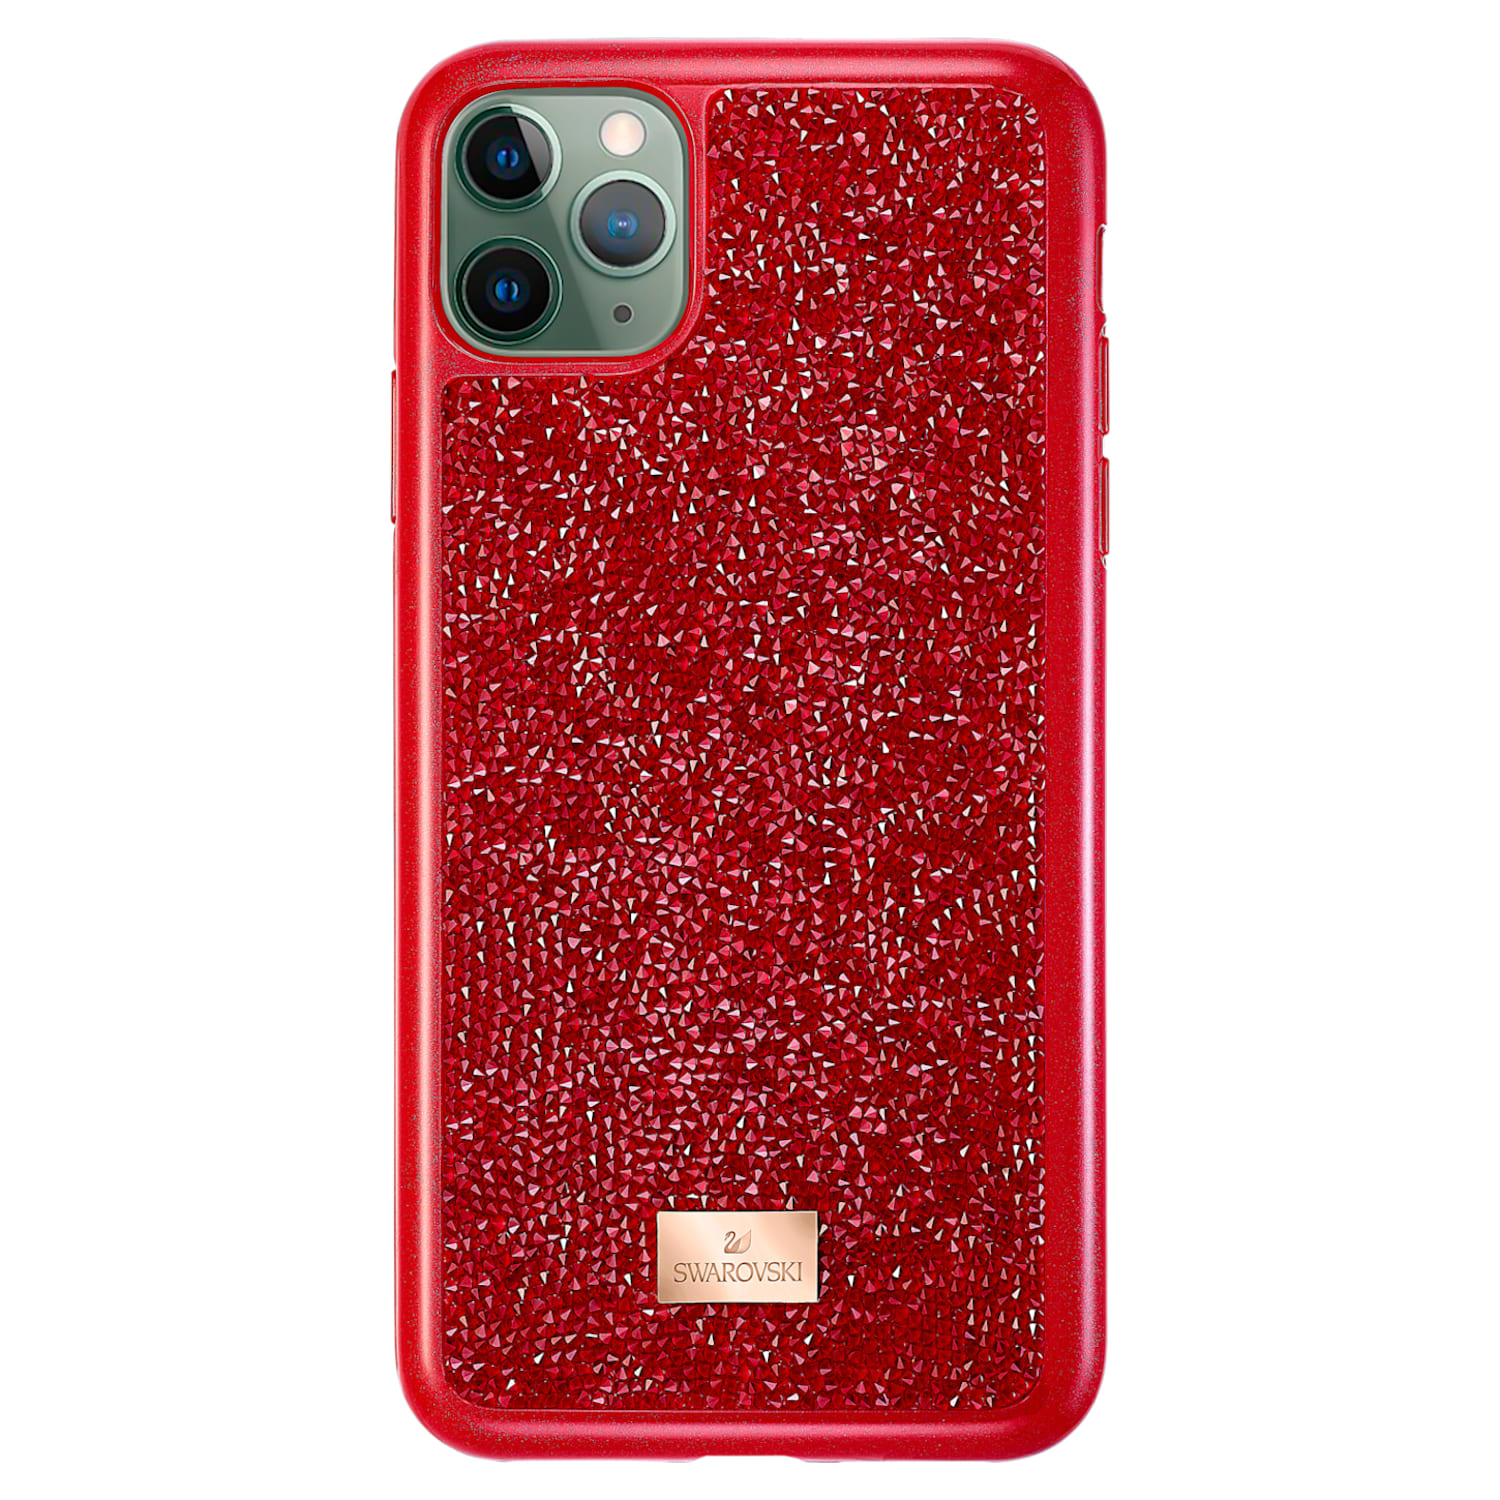 Iphone 11 Pro Max Red Flash Sales 55 Off Www Ingeniovirtual Com